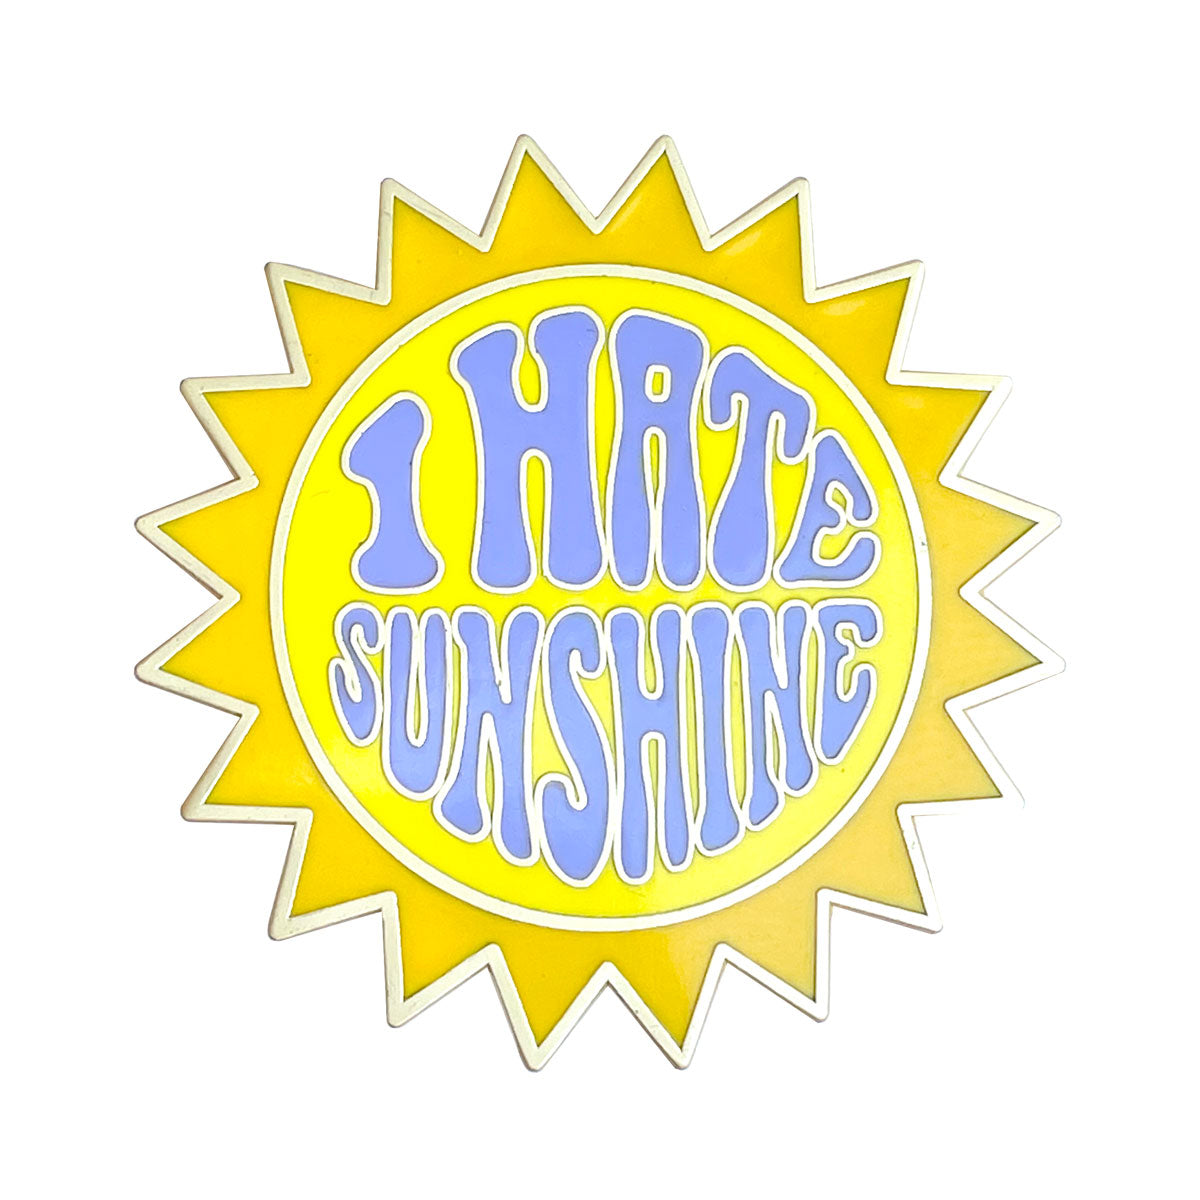 I Hate Sunshine Pin - Whosits Whatsits